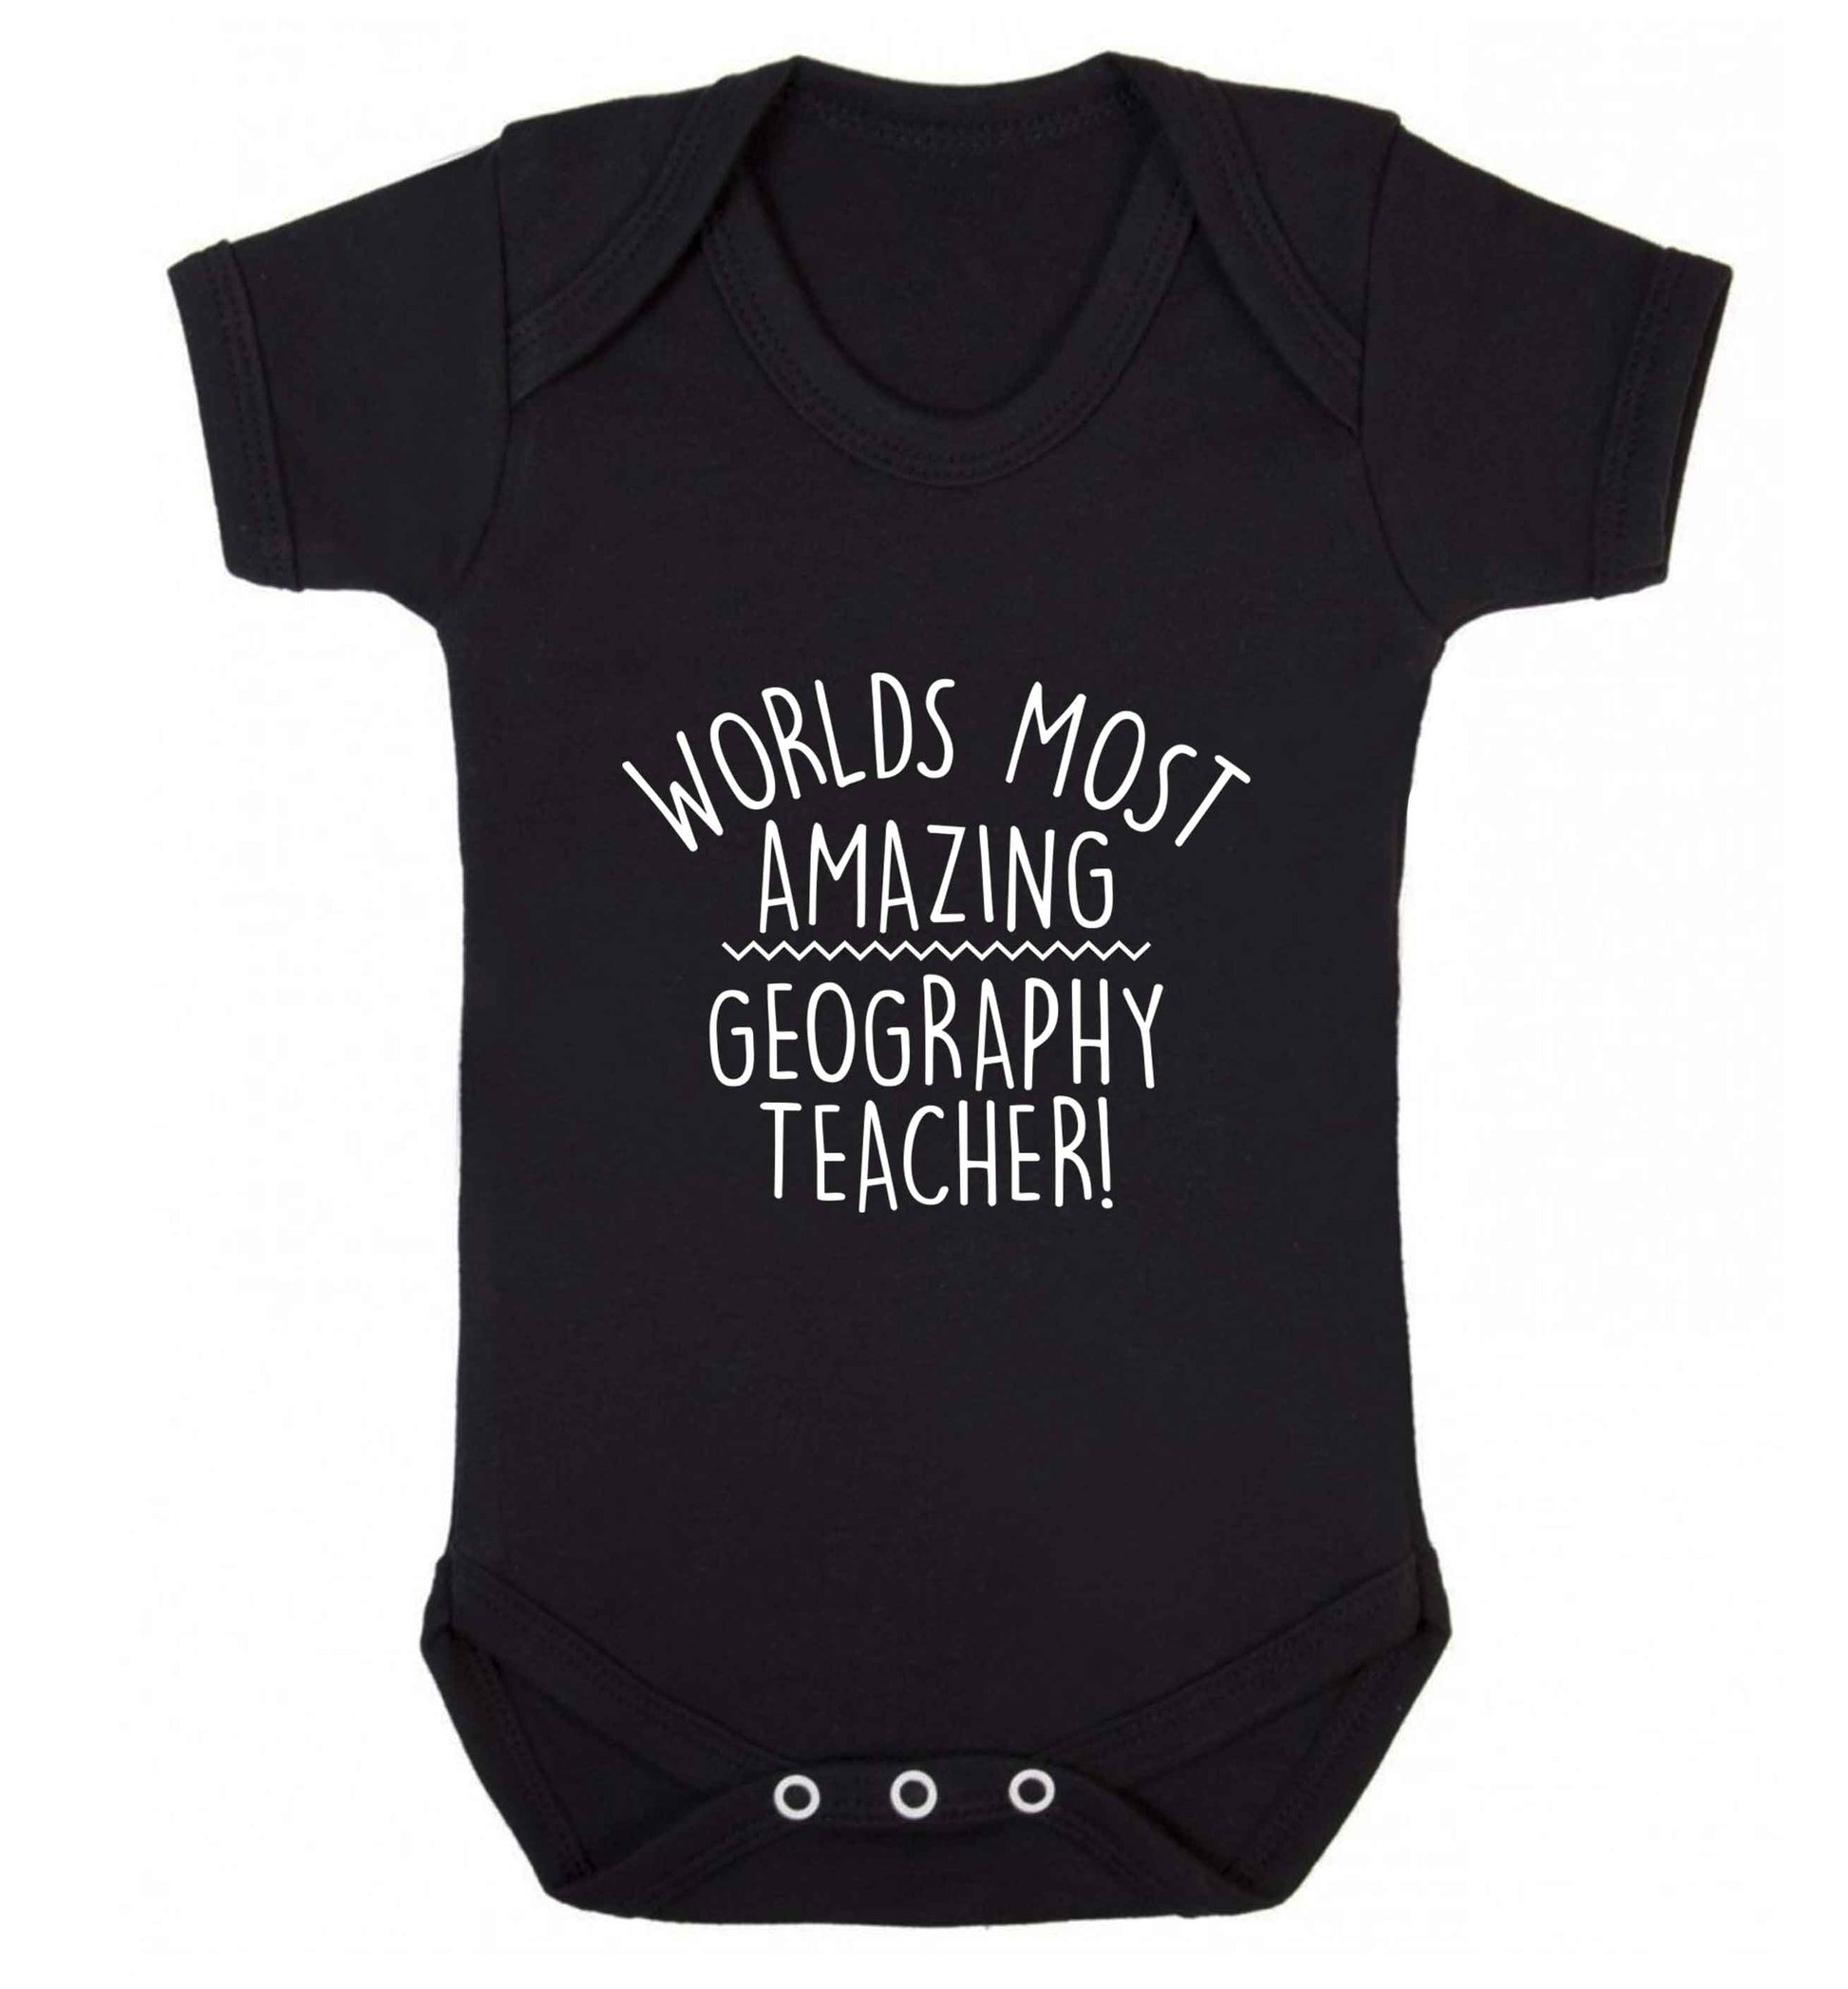 Worlds most amazing geography teacher baby vest black 18-24 months